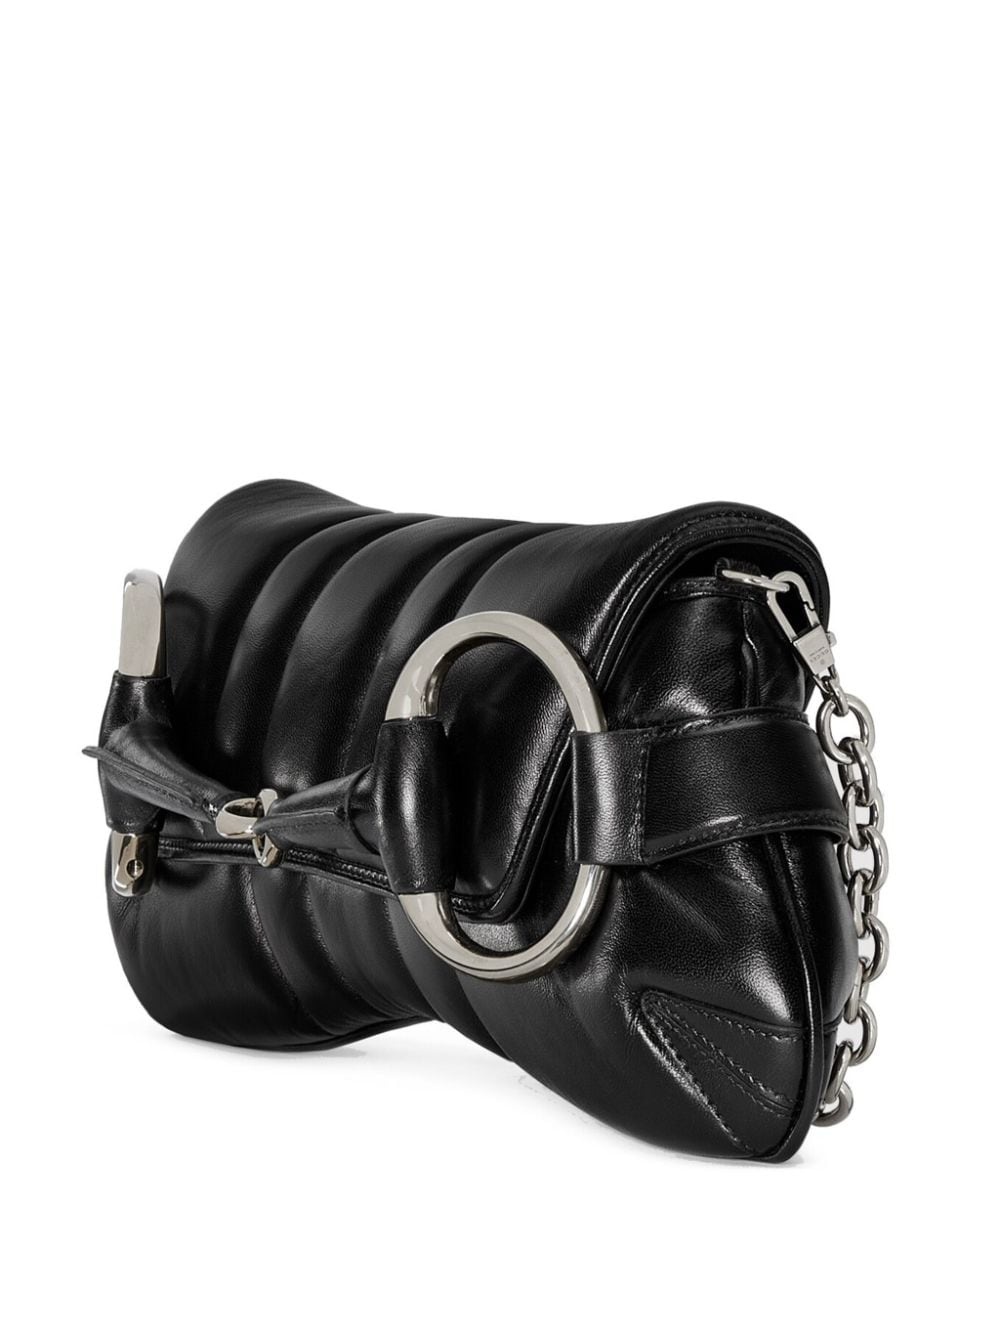 Horsebi chain medium leather shoulder bag - 6